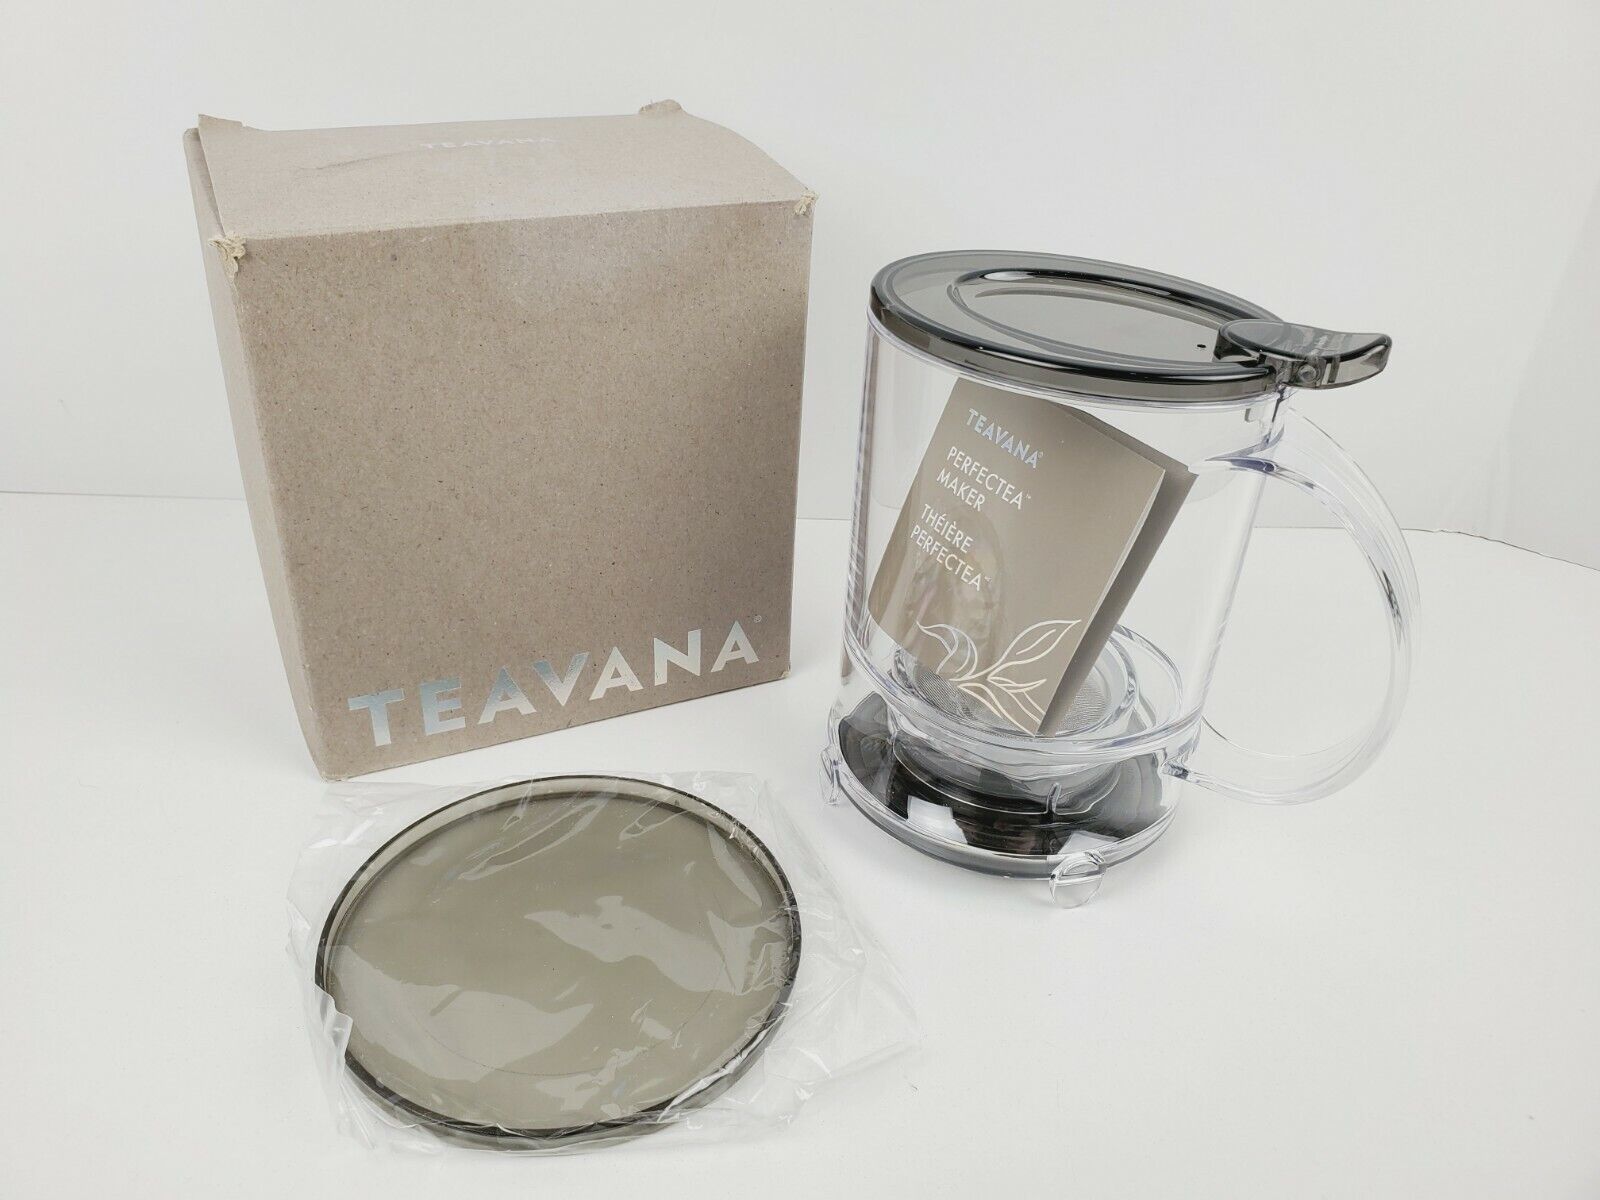 Teavana Perfectea Maker 16 Oz Perfect Loose Leaf Tea Maker Brewe